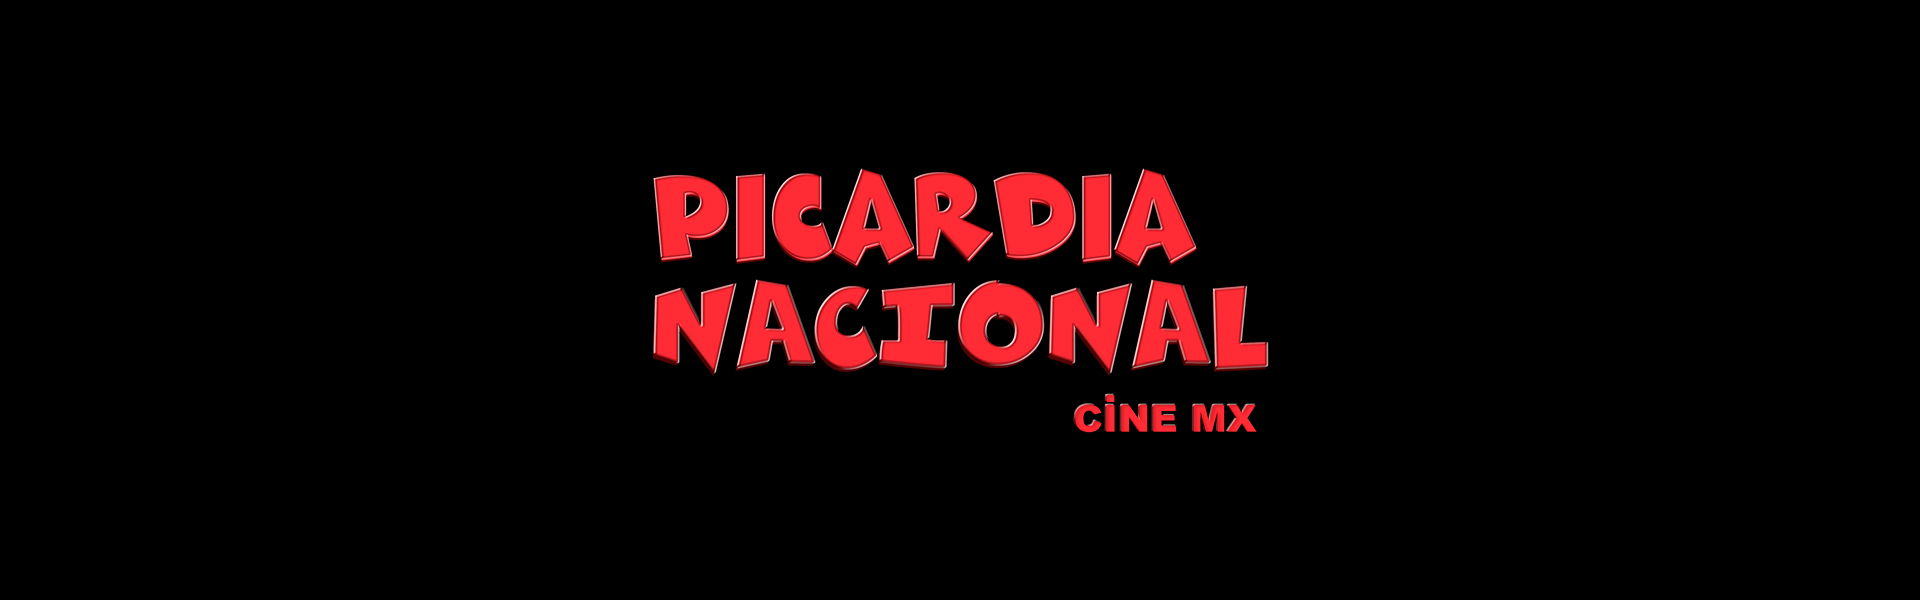 PICARDÍA NACIONAL - Banner desktop